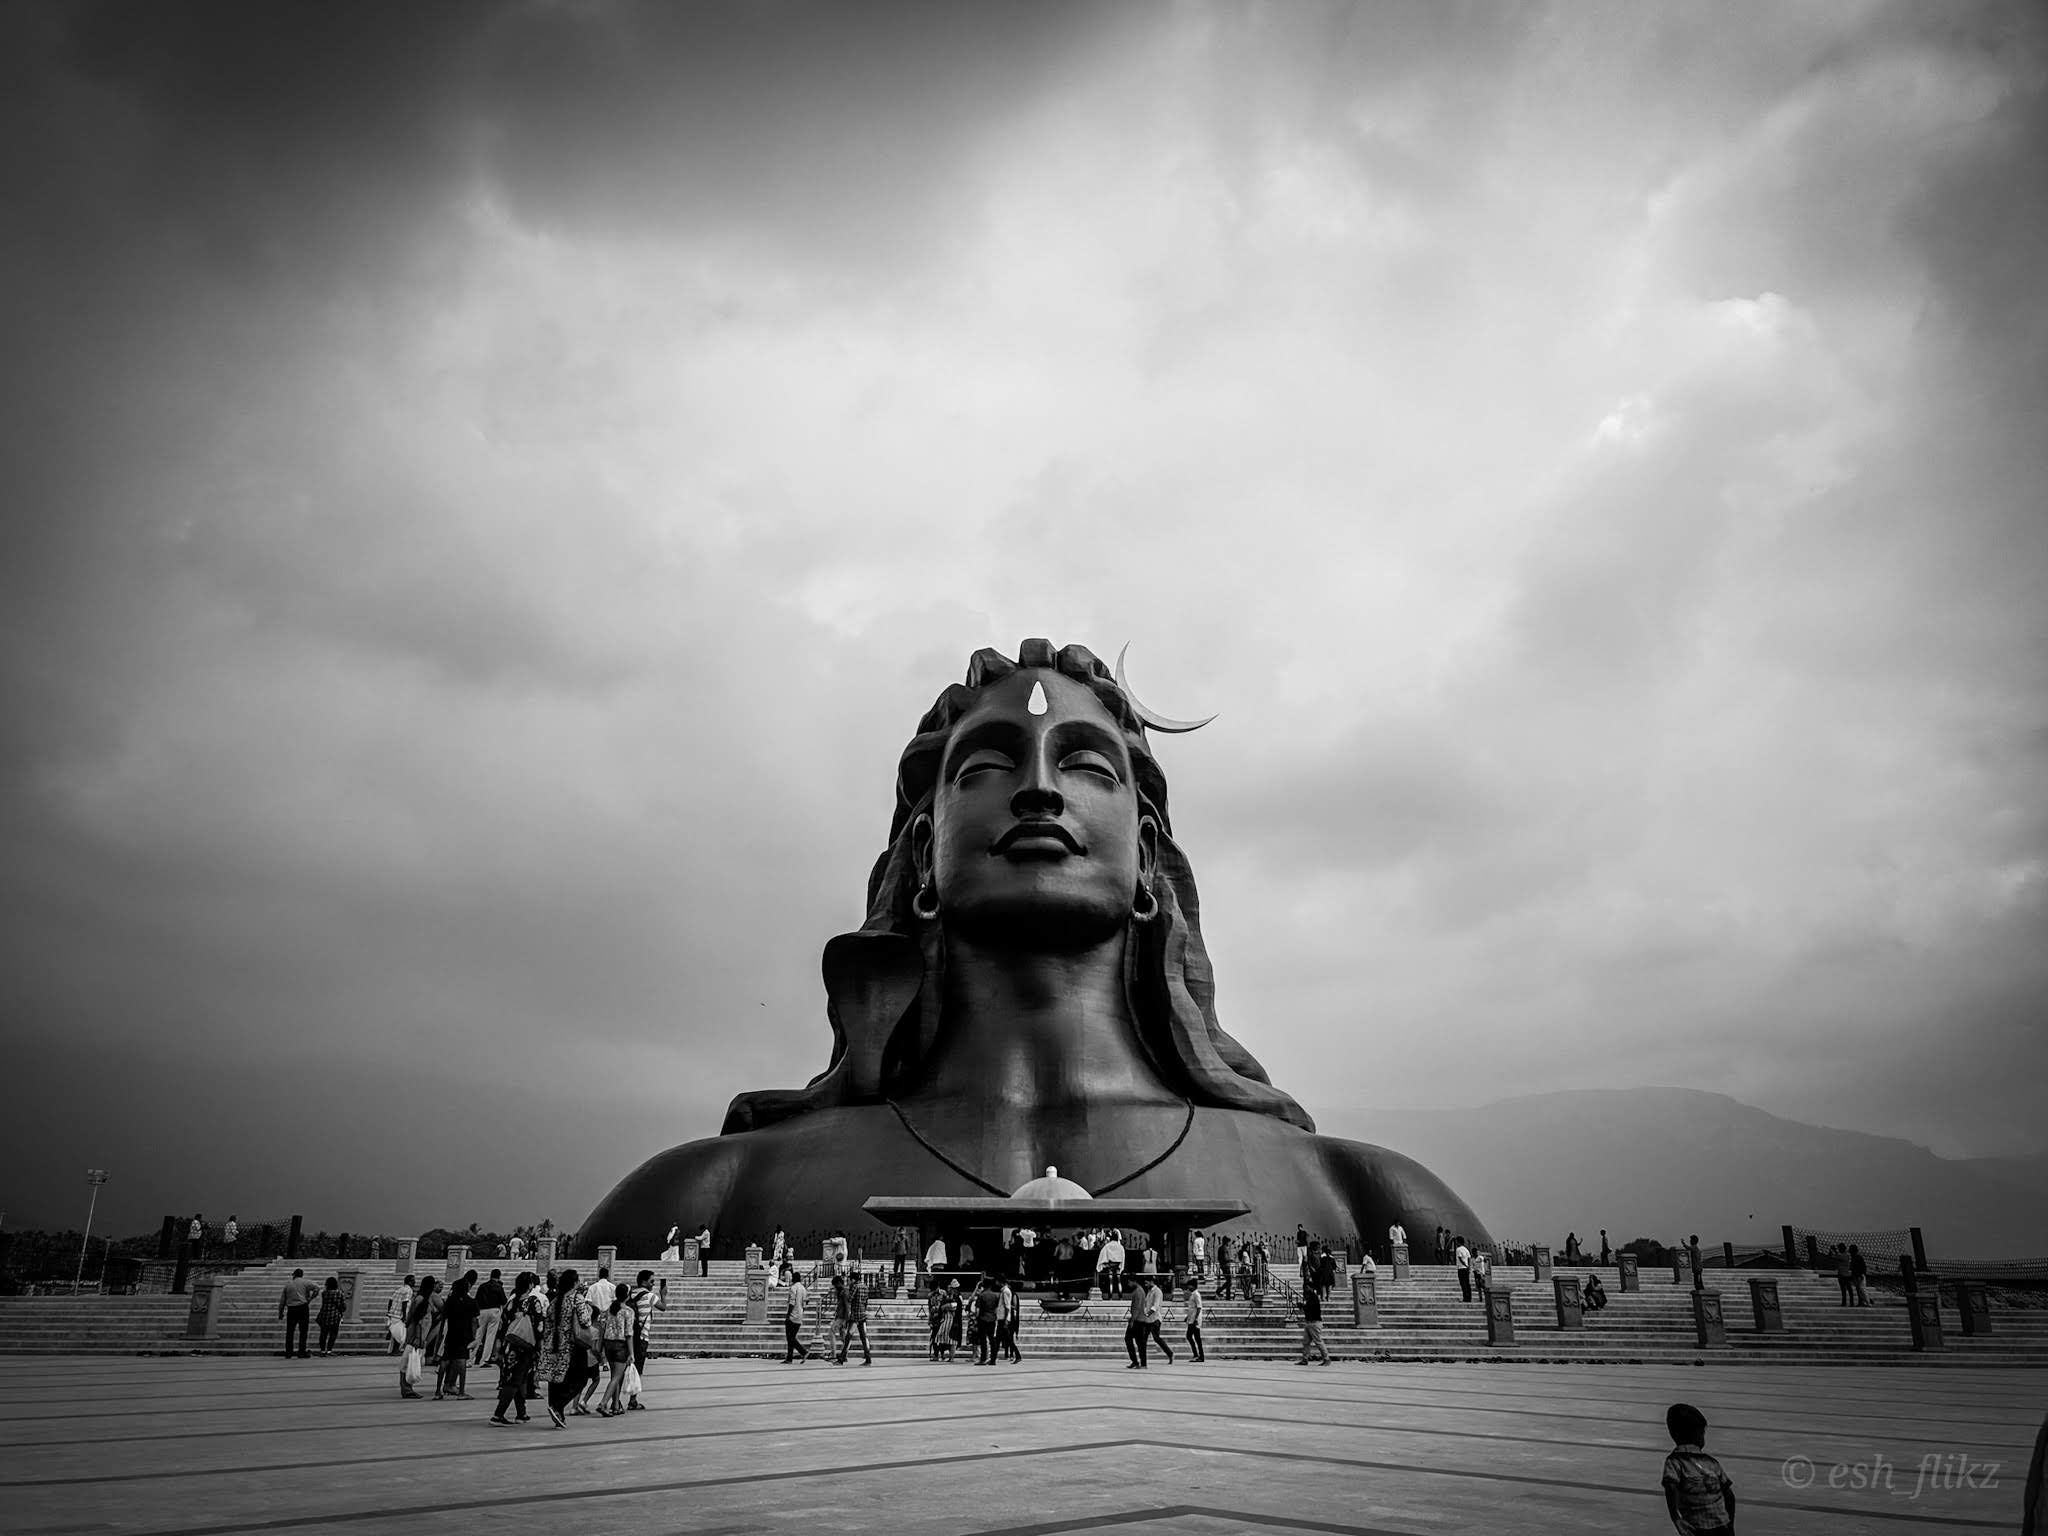 Shiva Statue in Coimbatore